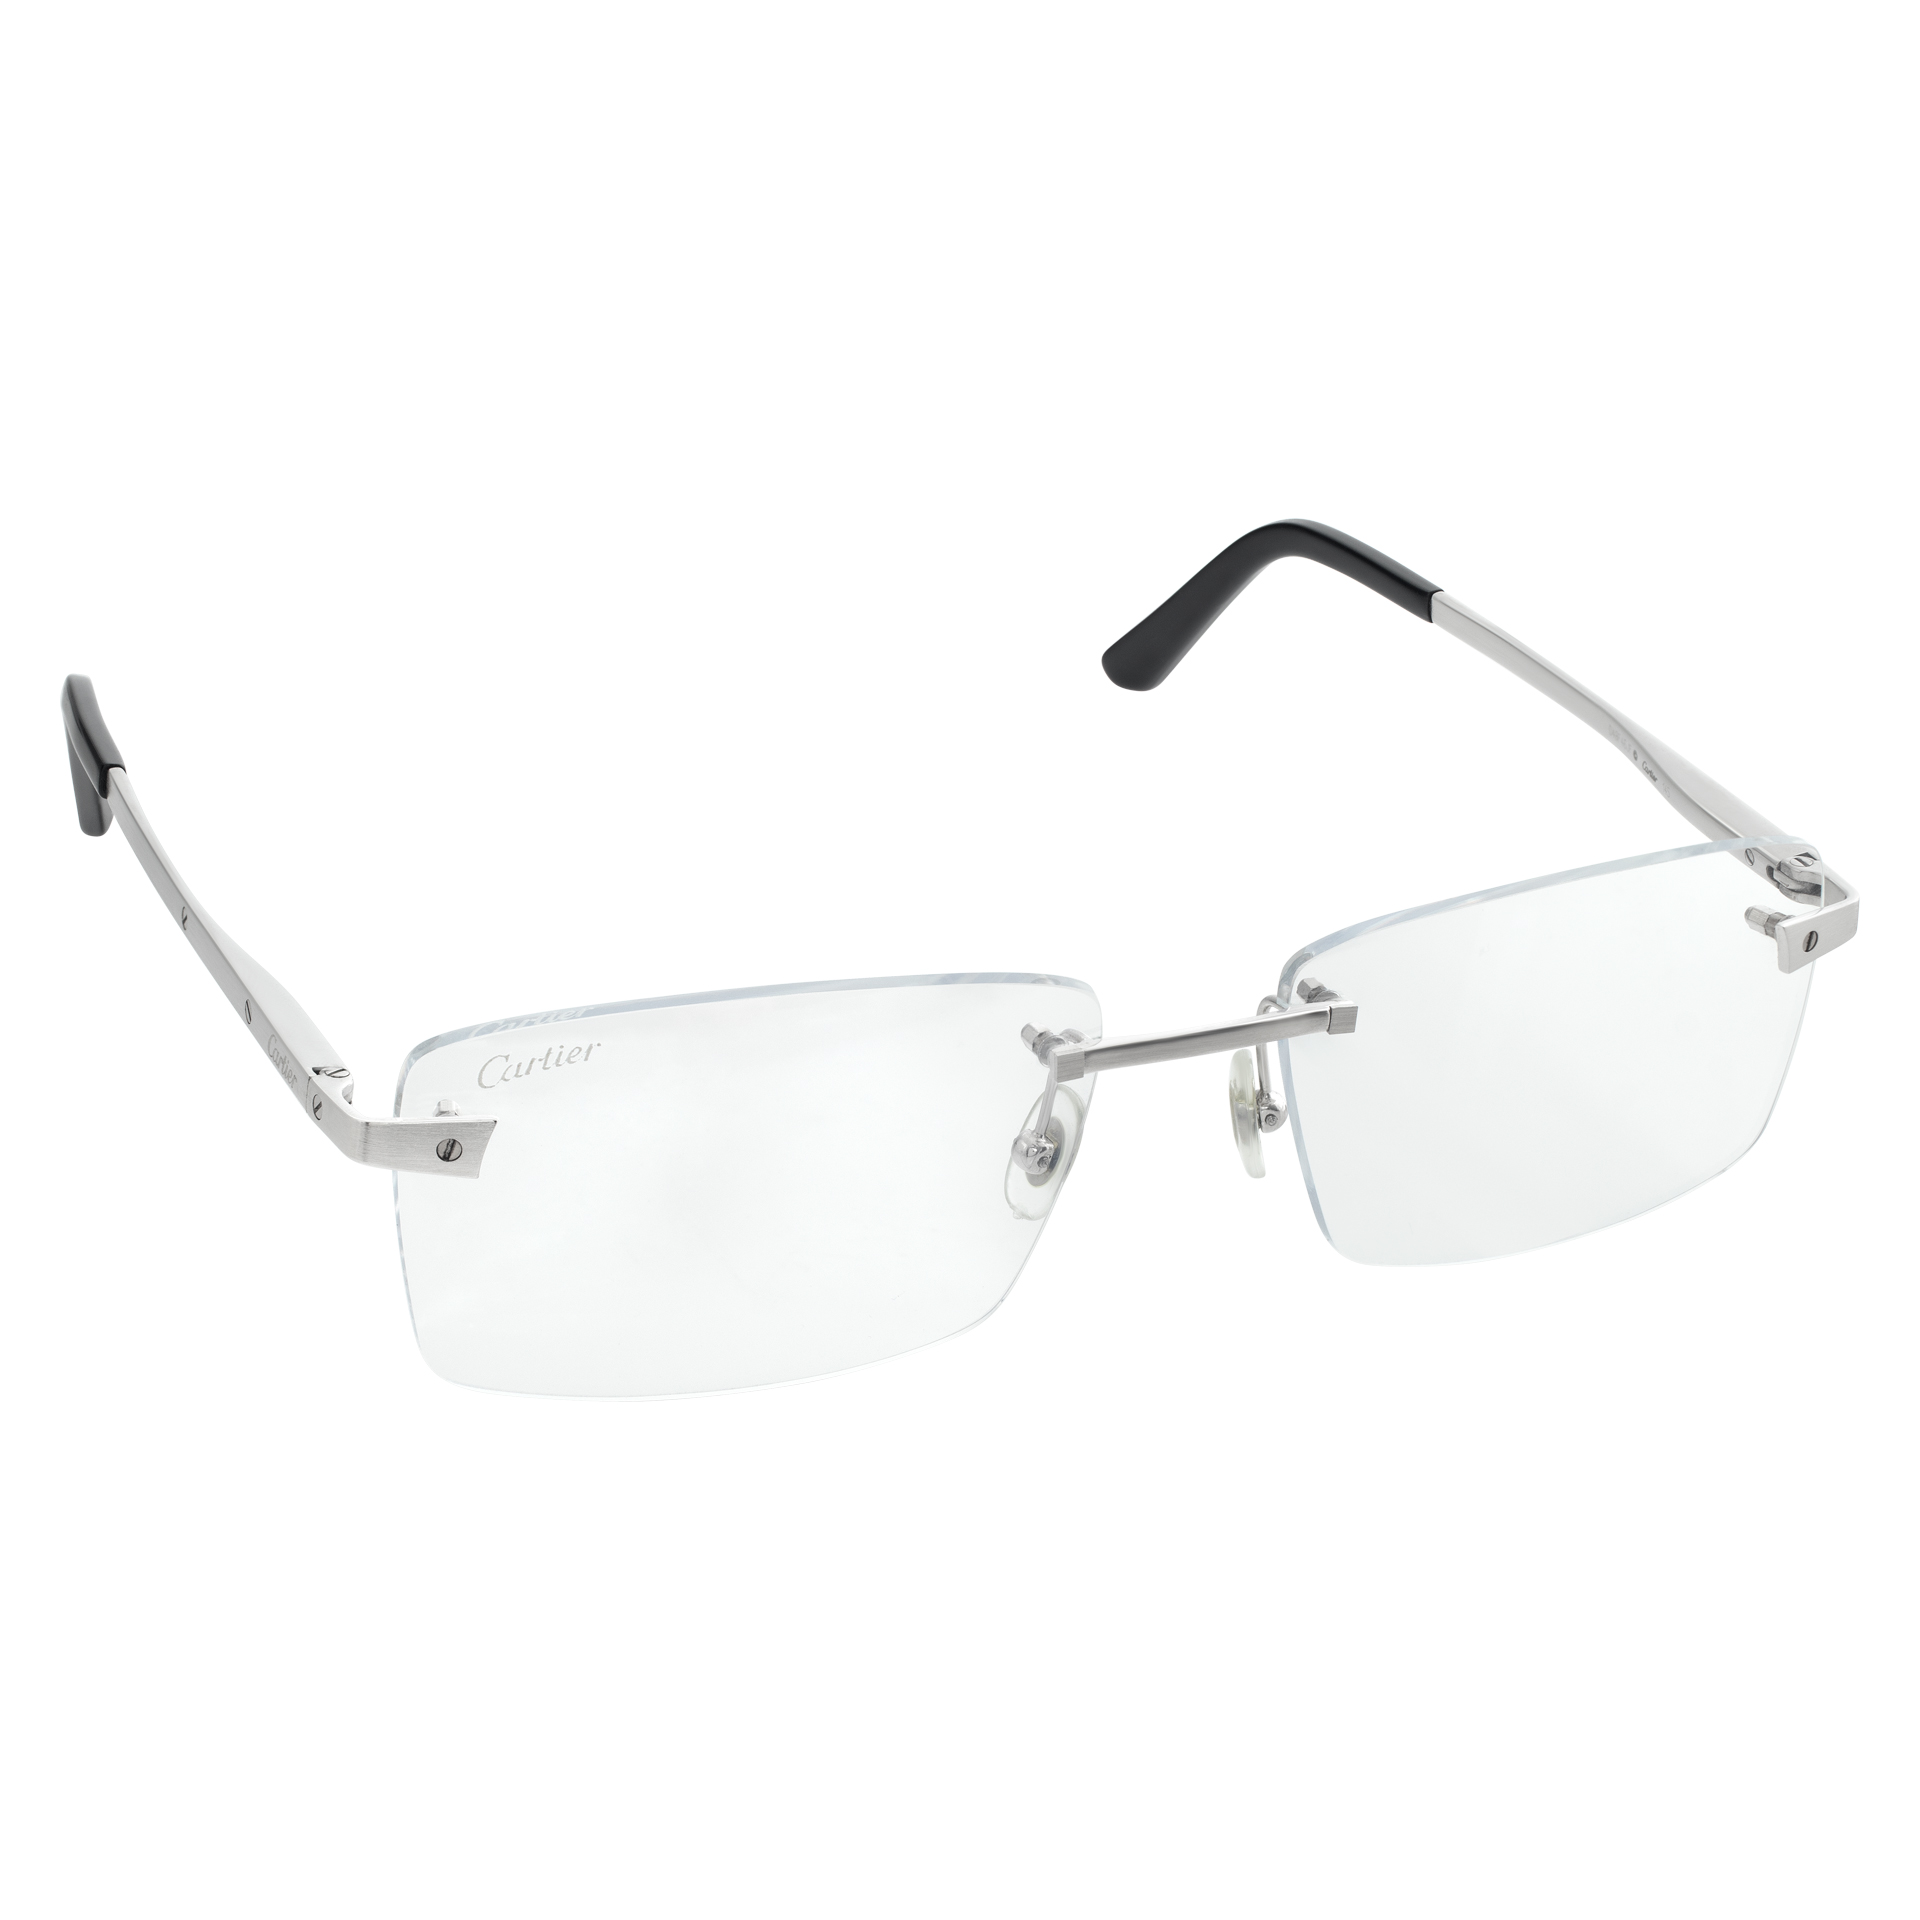 Cartier Rimless Silver Frame Glasses image 3